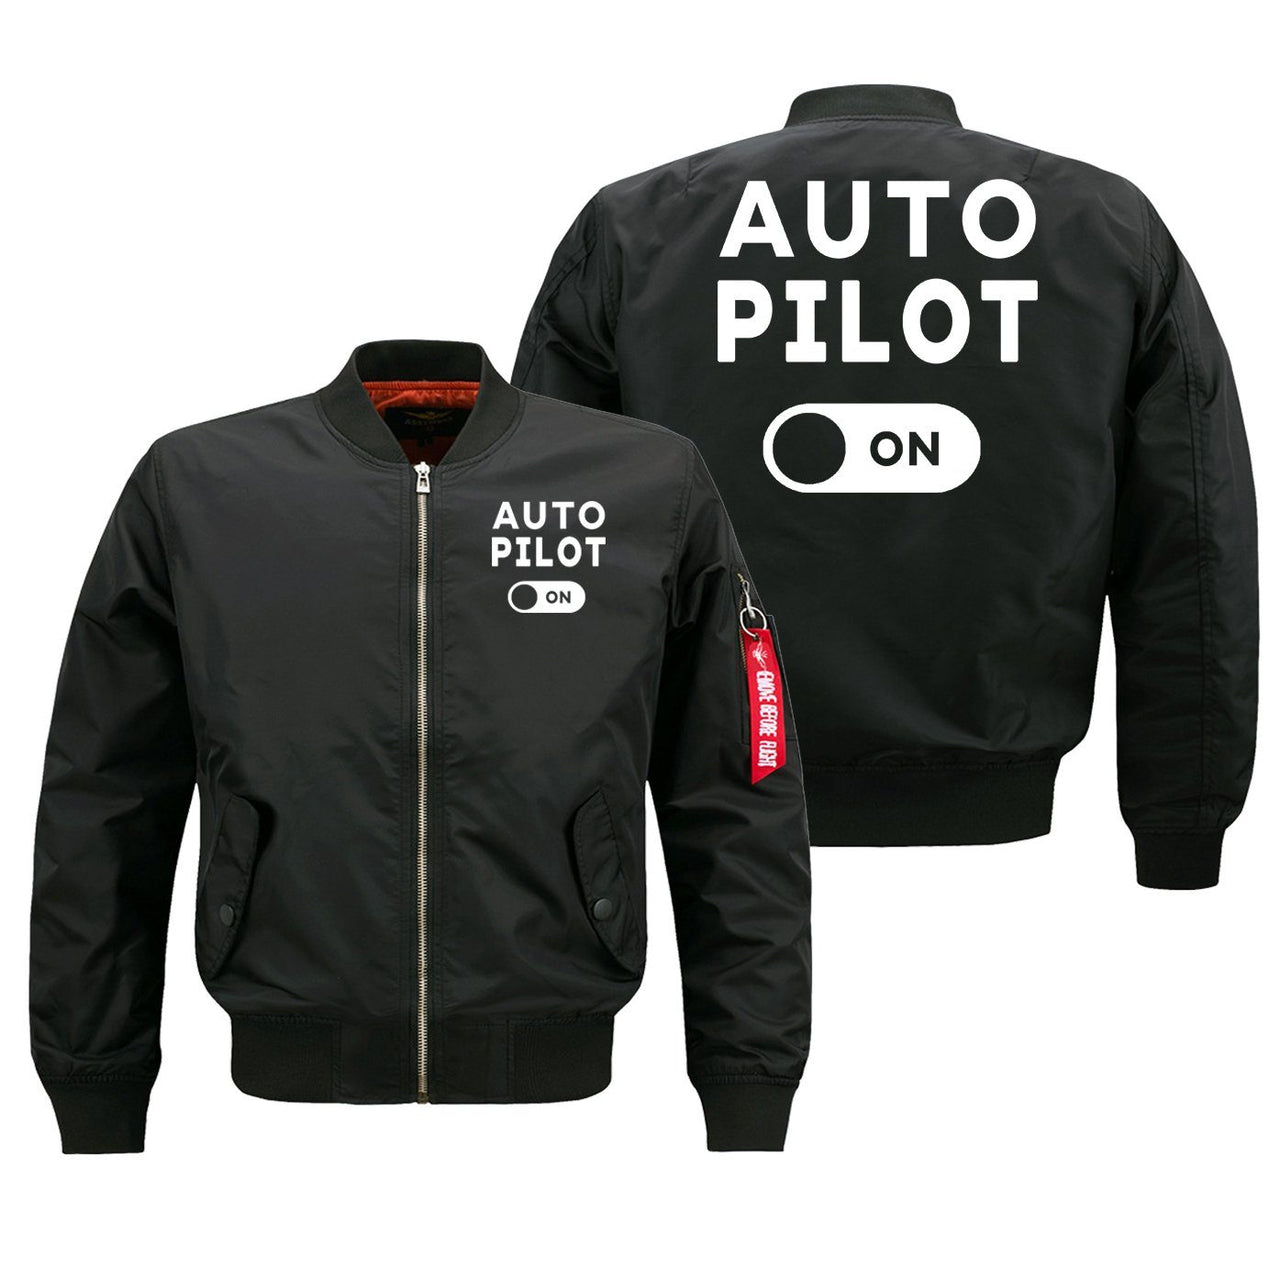 Auto Pilot ON Designed Pilot Jackets (Customizable) Pilot Eyes Store Black (Thin) M (US XS) 